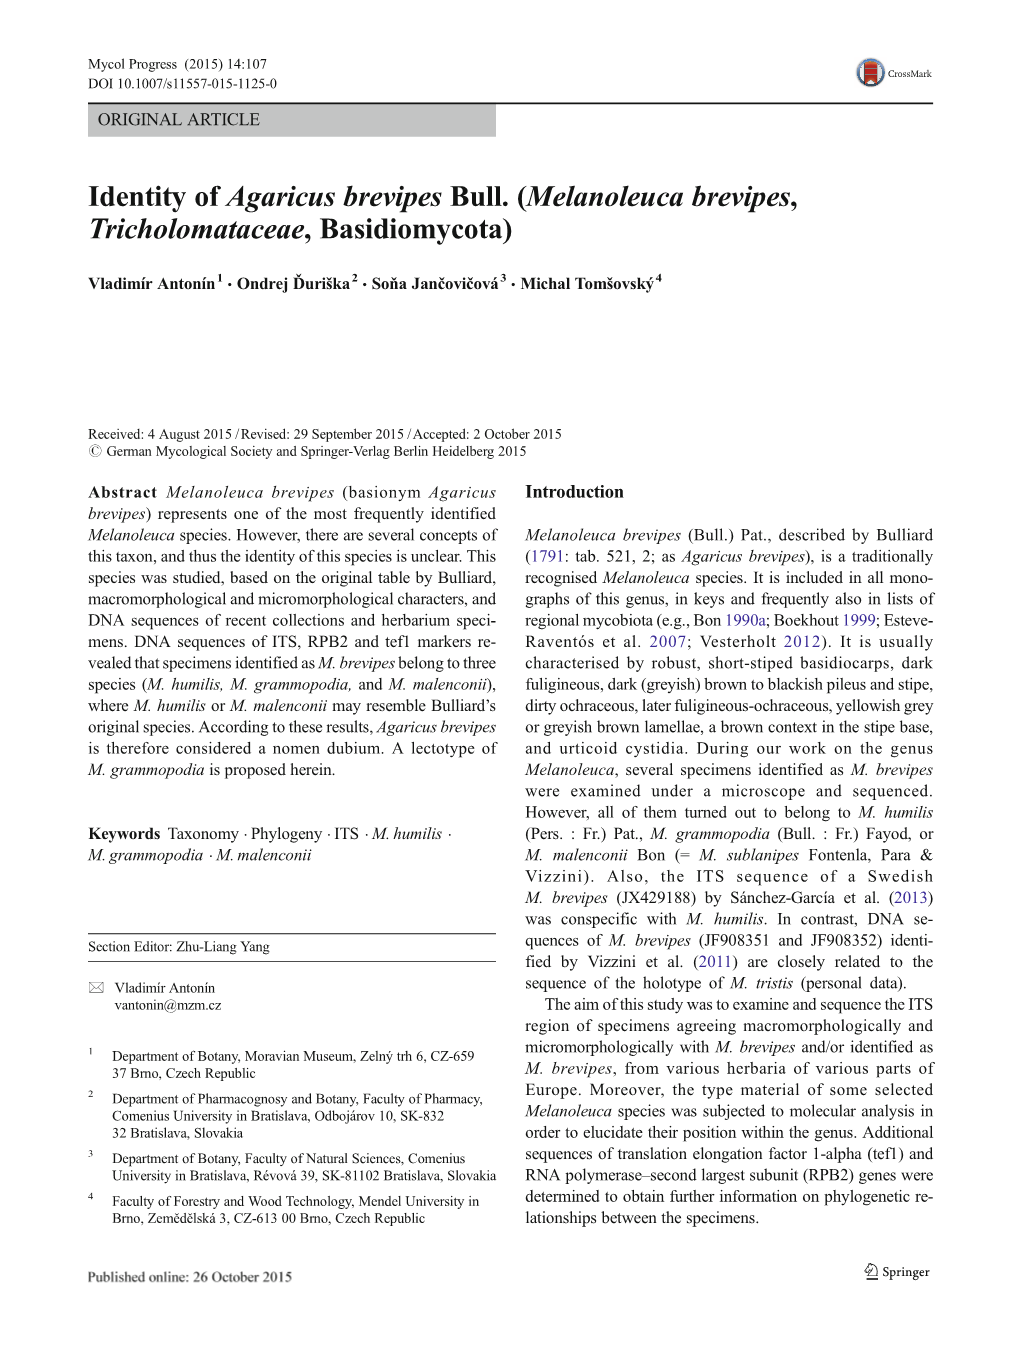 Identity of Agaricus Brevipes Bull. (Melanoleuca Brevipes, Tricholomataceae, Basidiomycota)